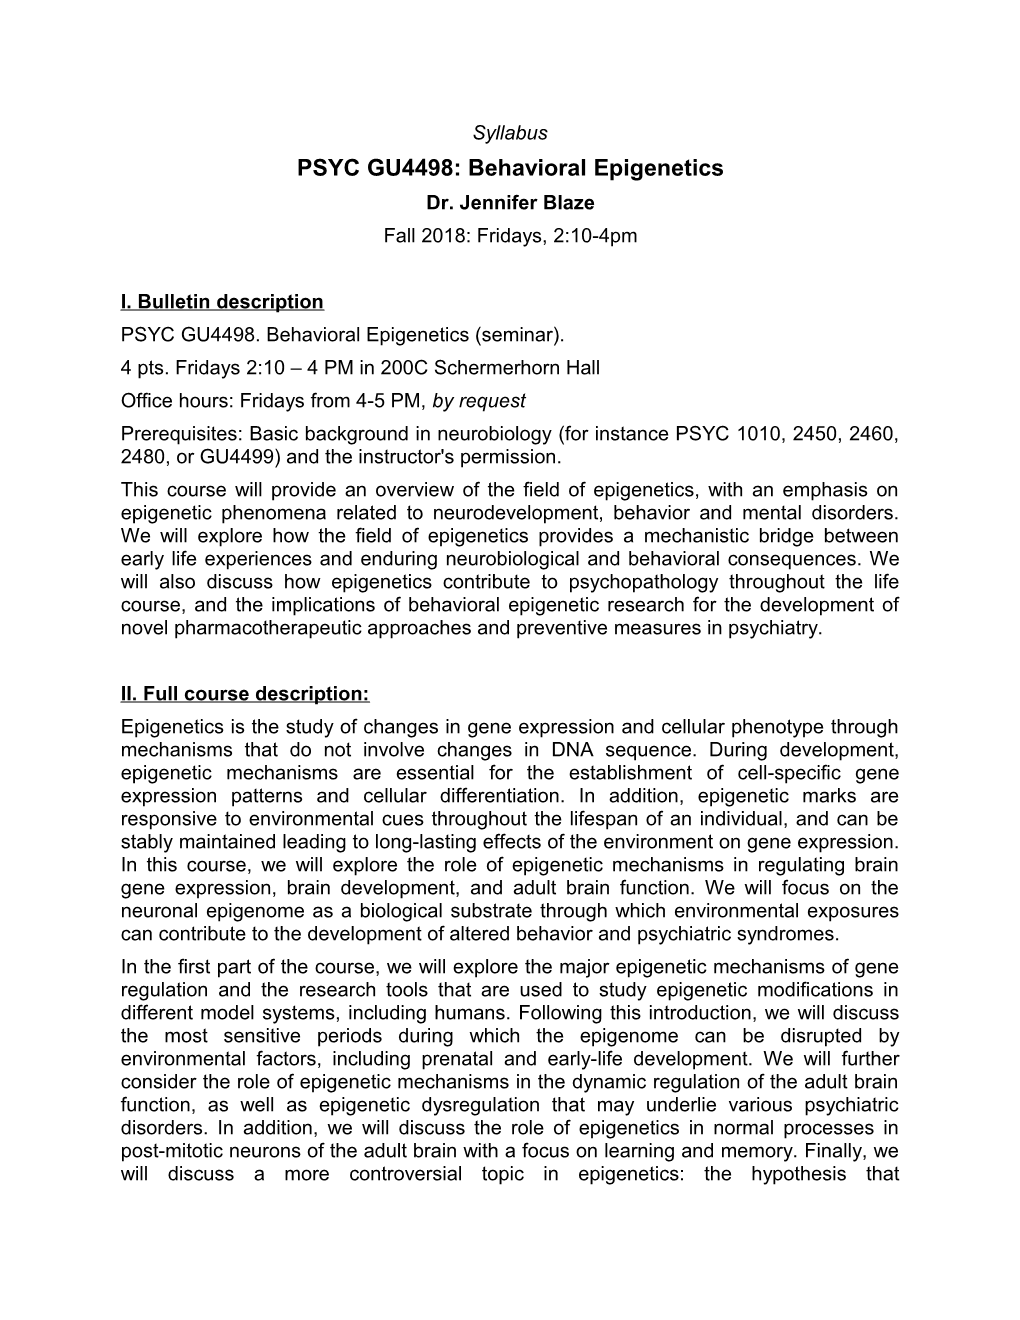 PSYC GU4498: Behavioral Epigenetics